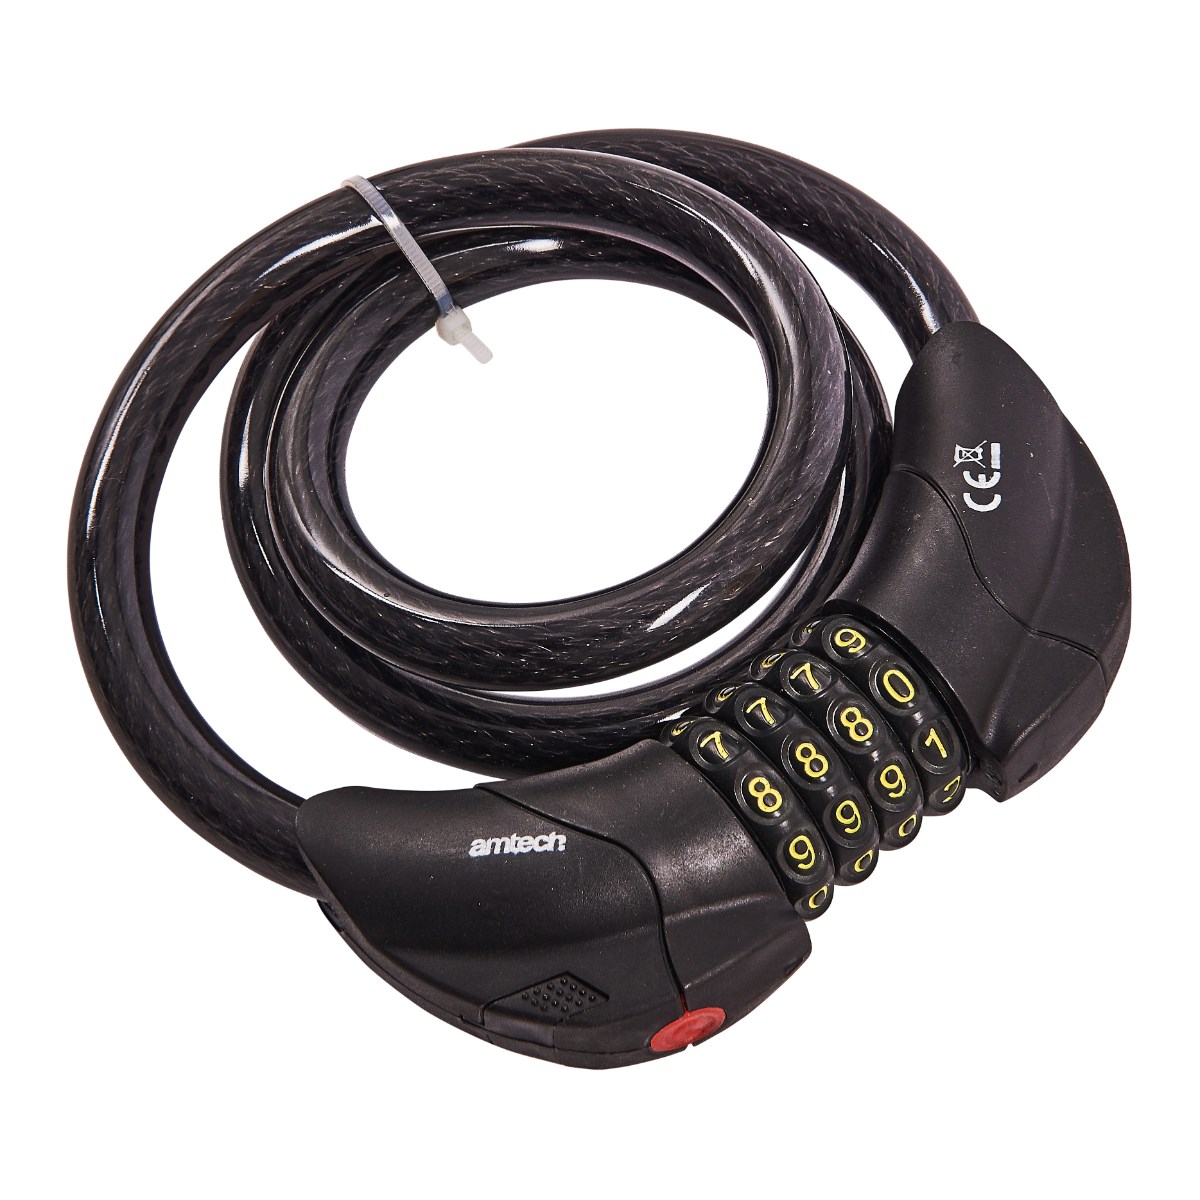 LED combination cable lock - Amtech